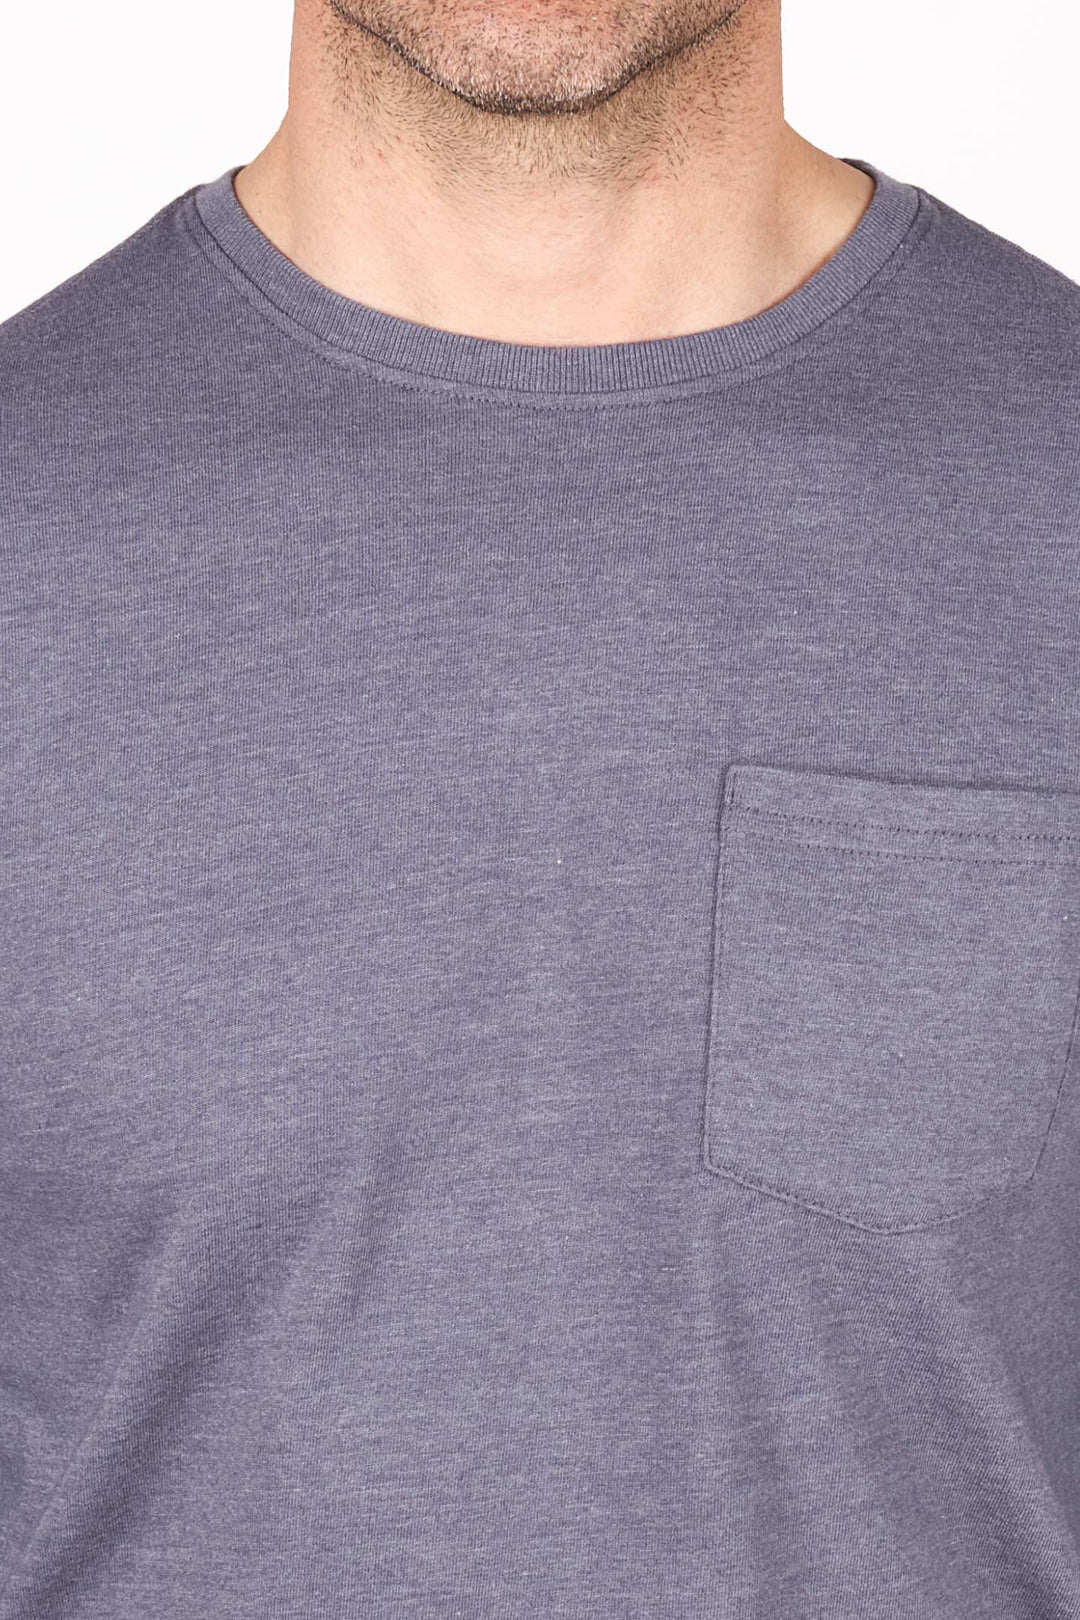 Buy Heather Grey Long Sleeve Pocket Tee for Short Men | Ash & Erie   T-Shirts